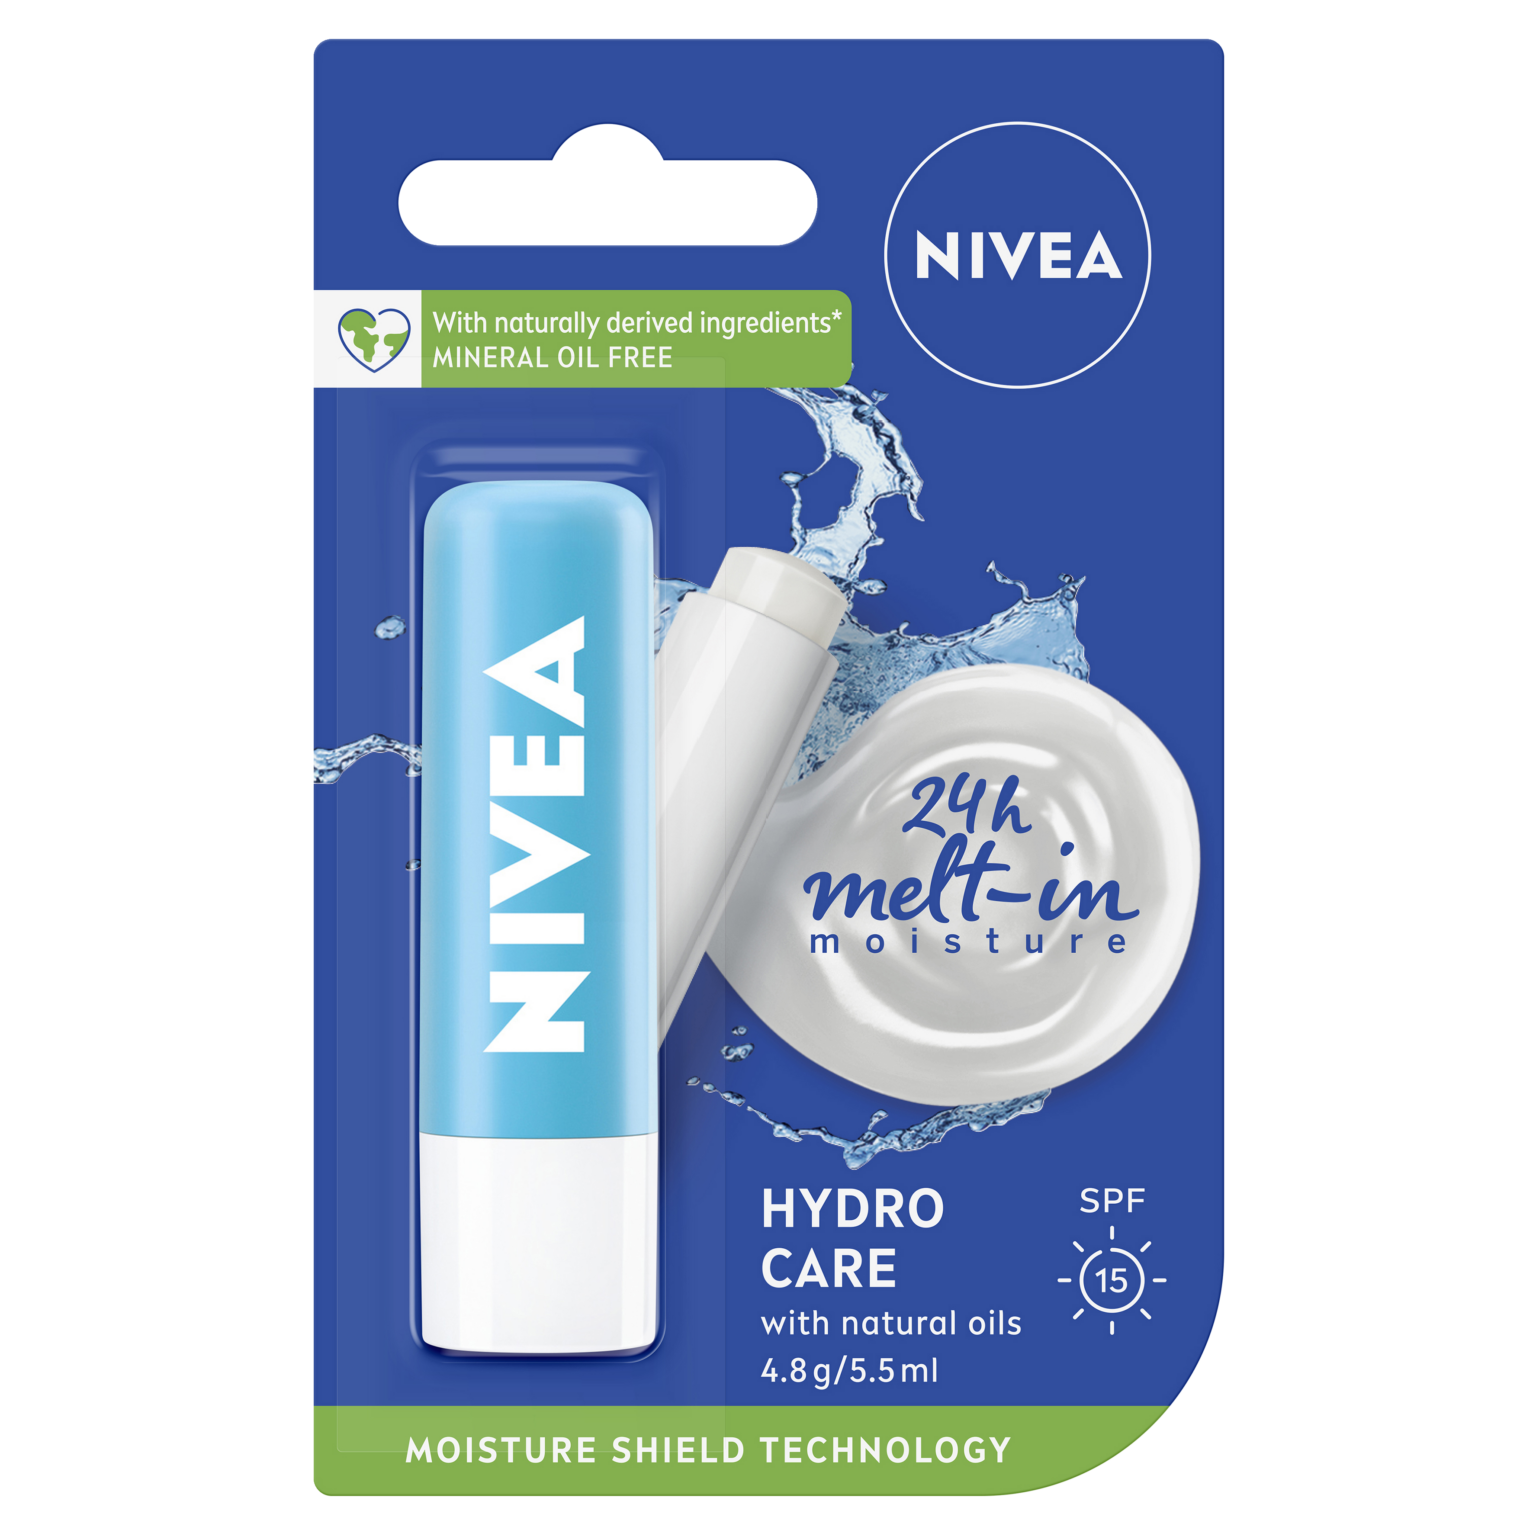 NIVEA Lip Care Hydro Care SPF15 Reviews - beautyheaven